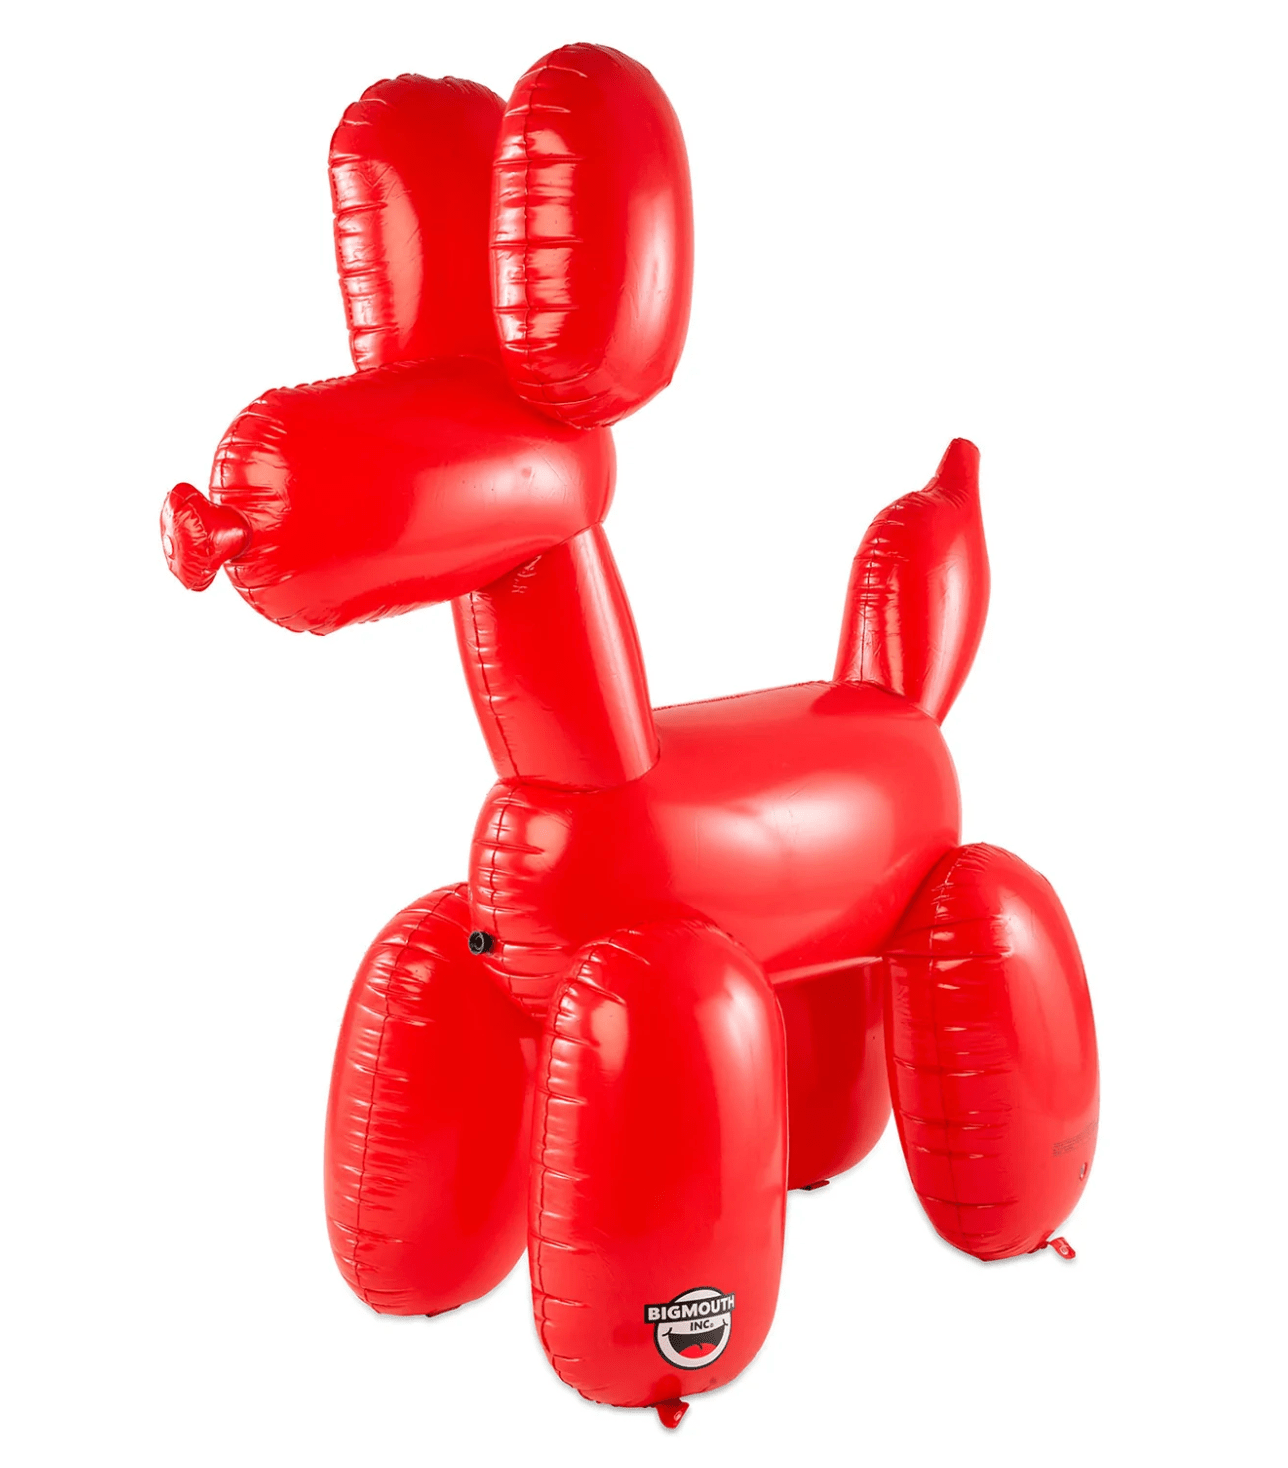 Balloon Dog Sprinkler Games WOW Sports & BigMouth Inc. 